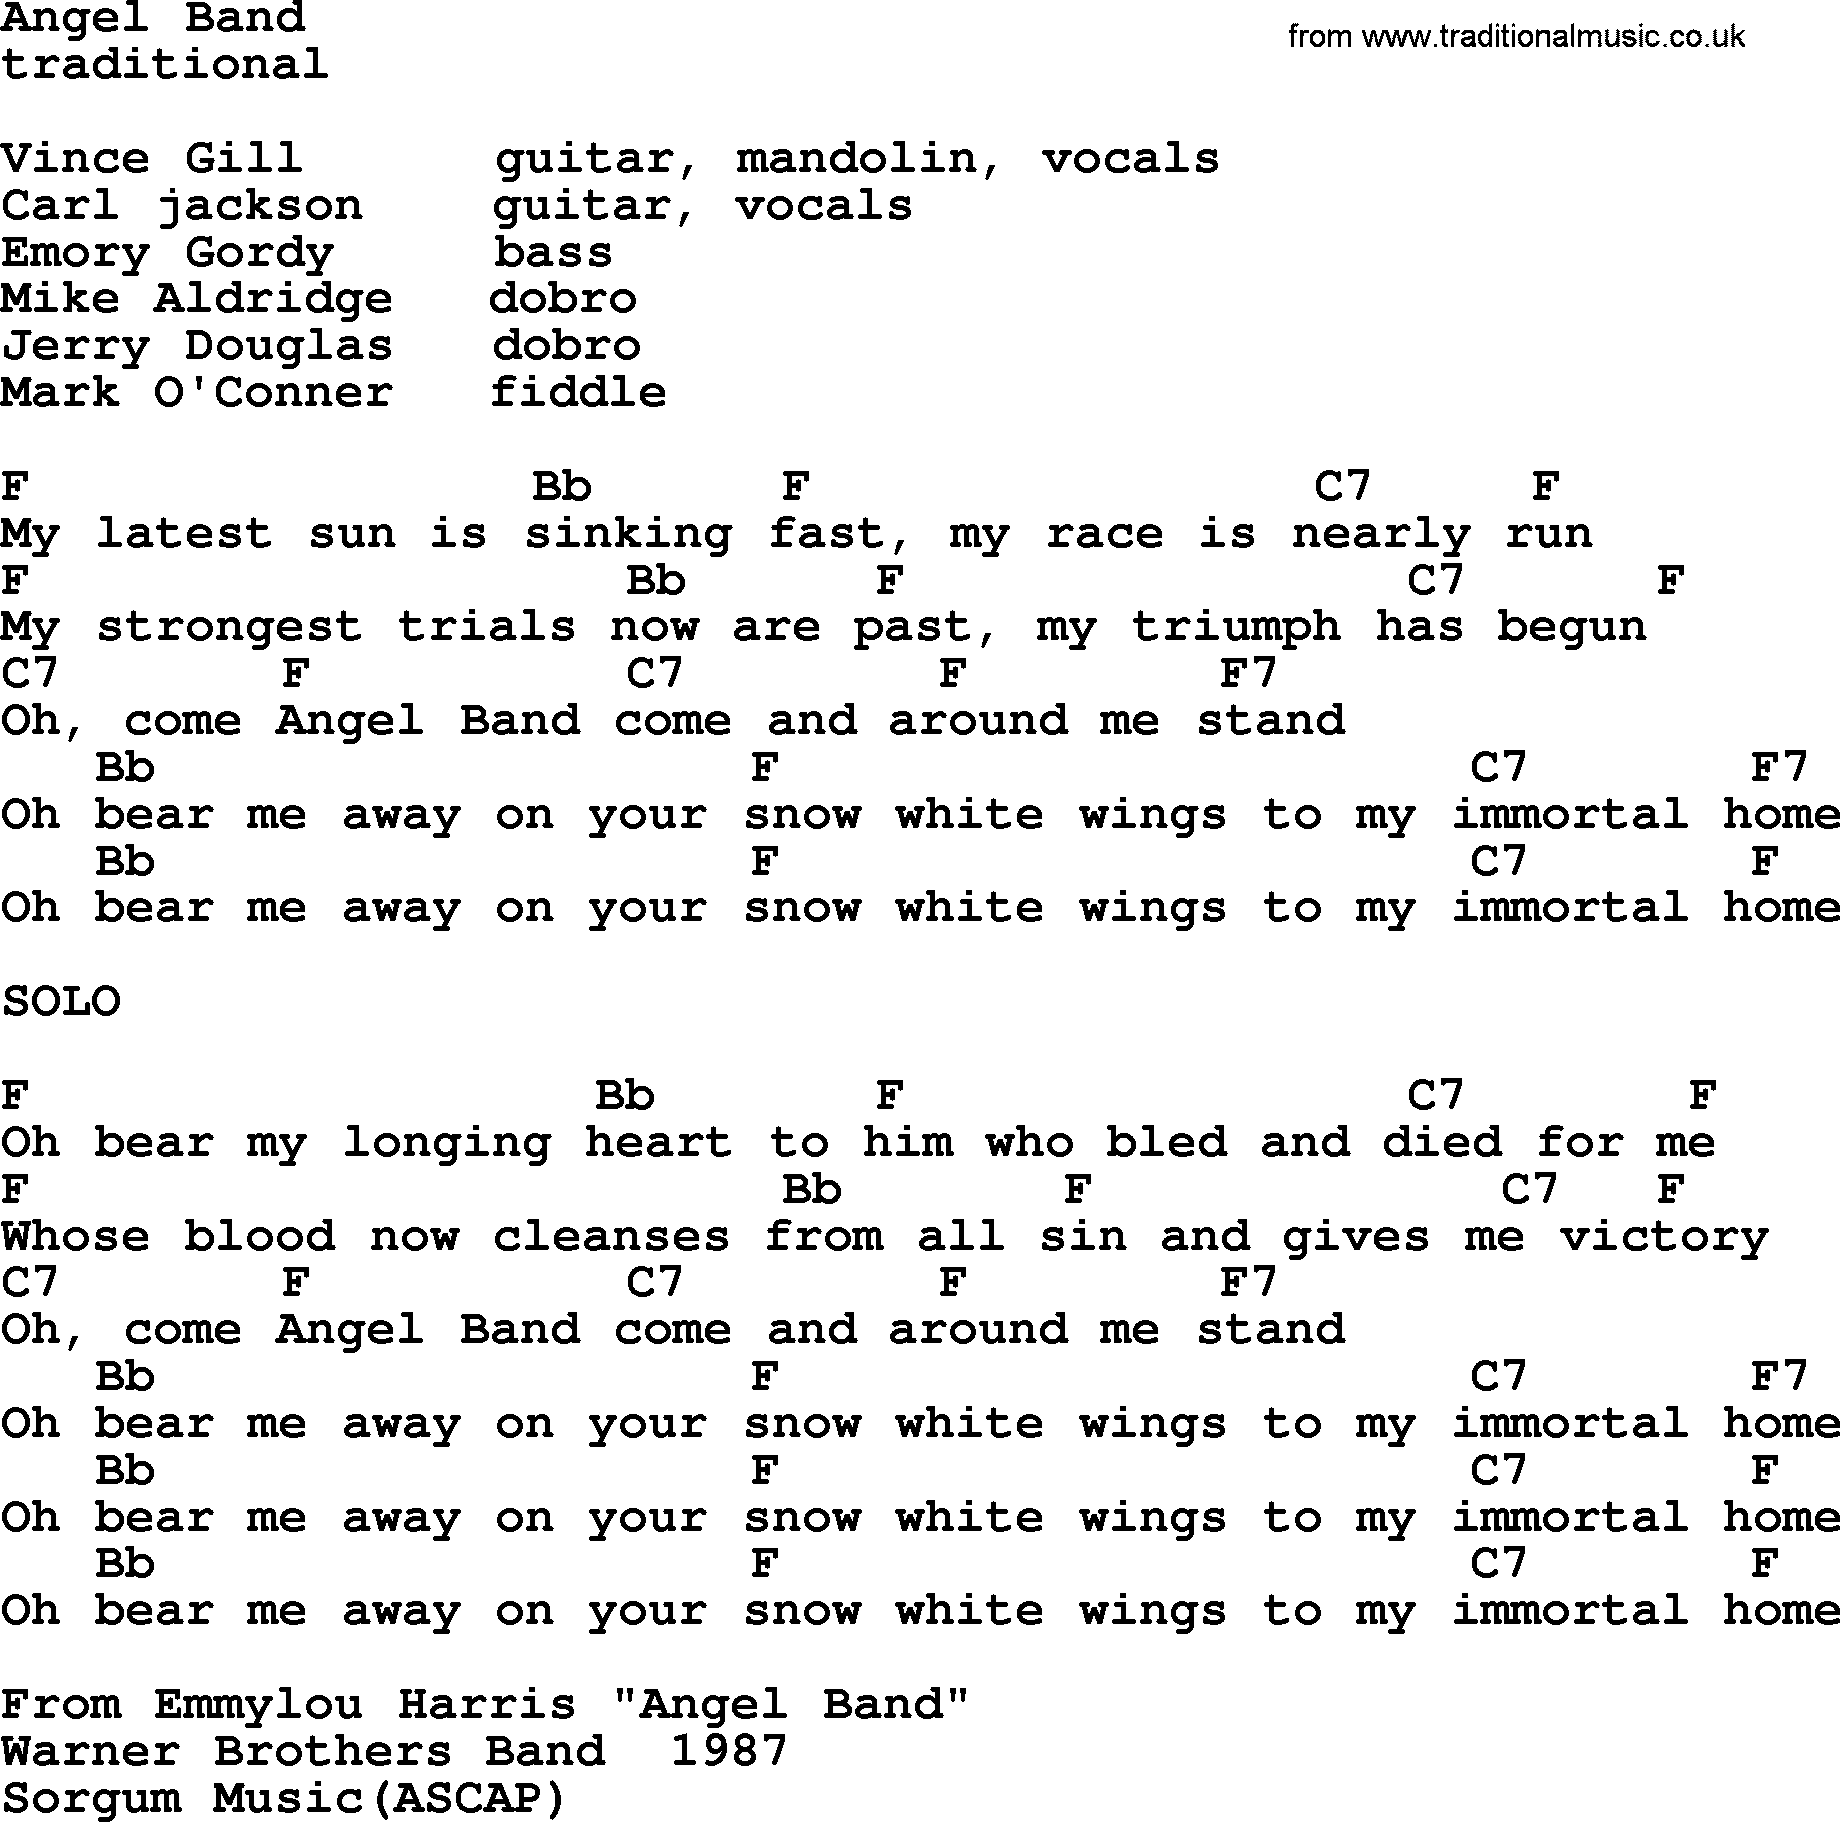 Emmylou Harris song: Angel Band lyrics and chords